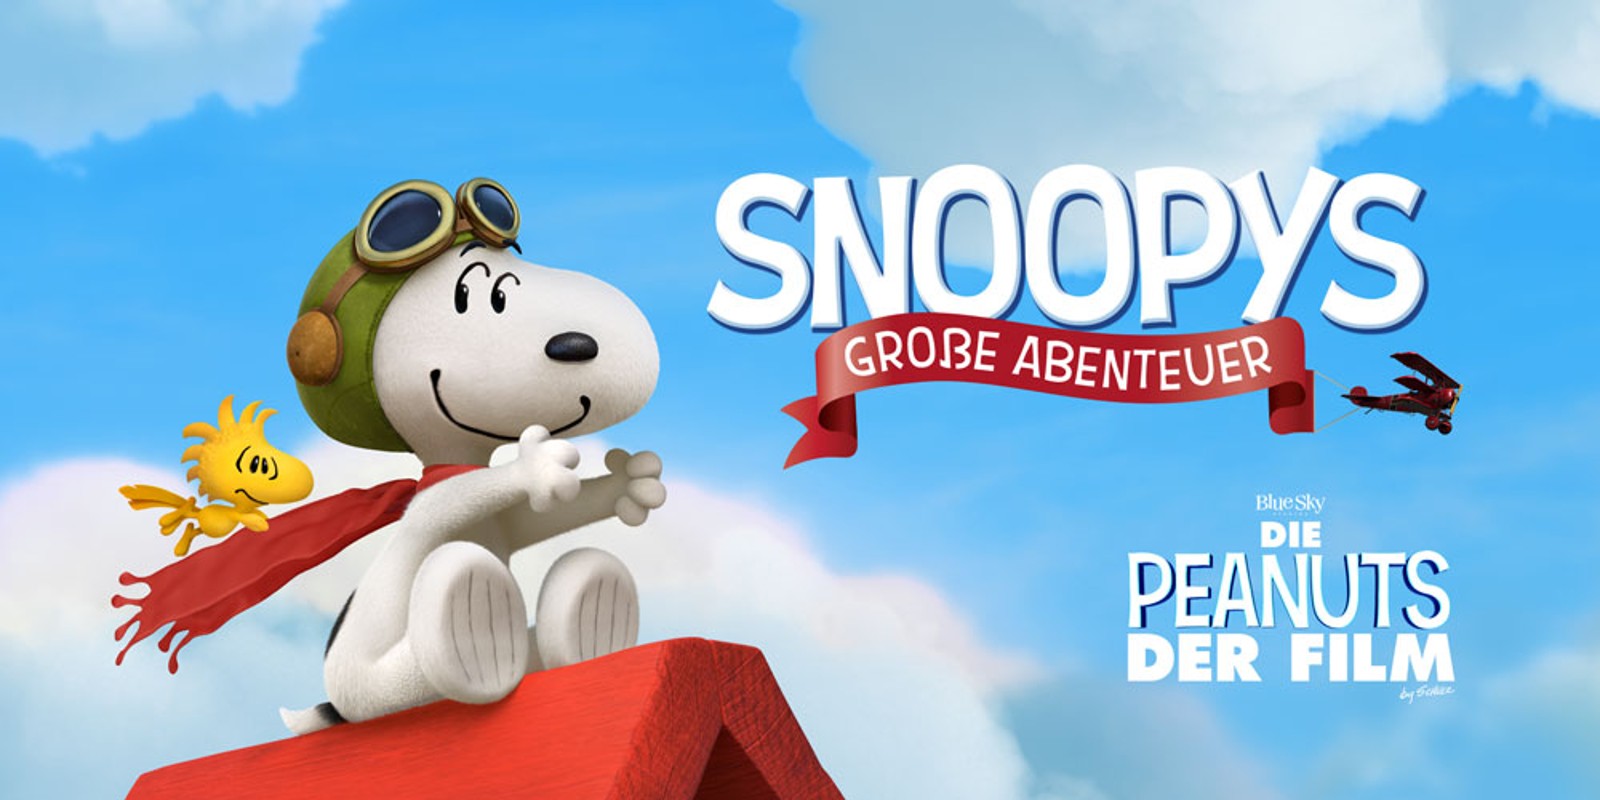 Die Peanuts - Der Film: Snoopys große Abenteuer